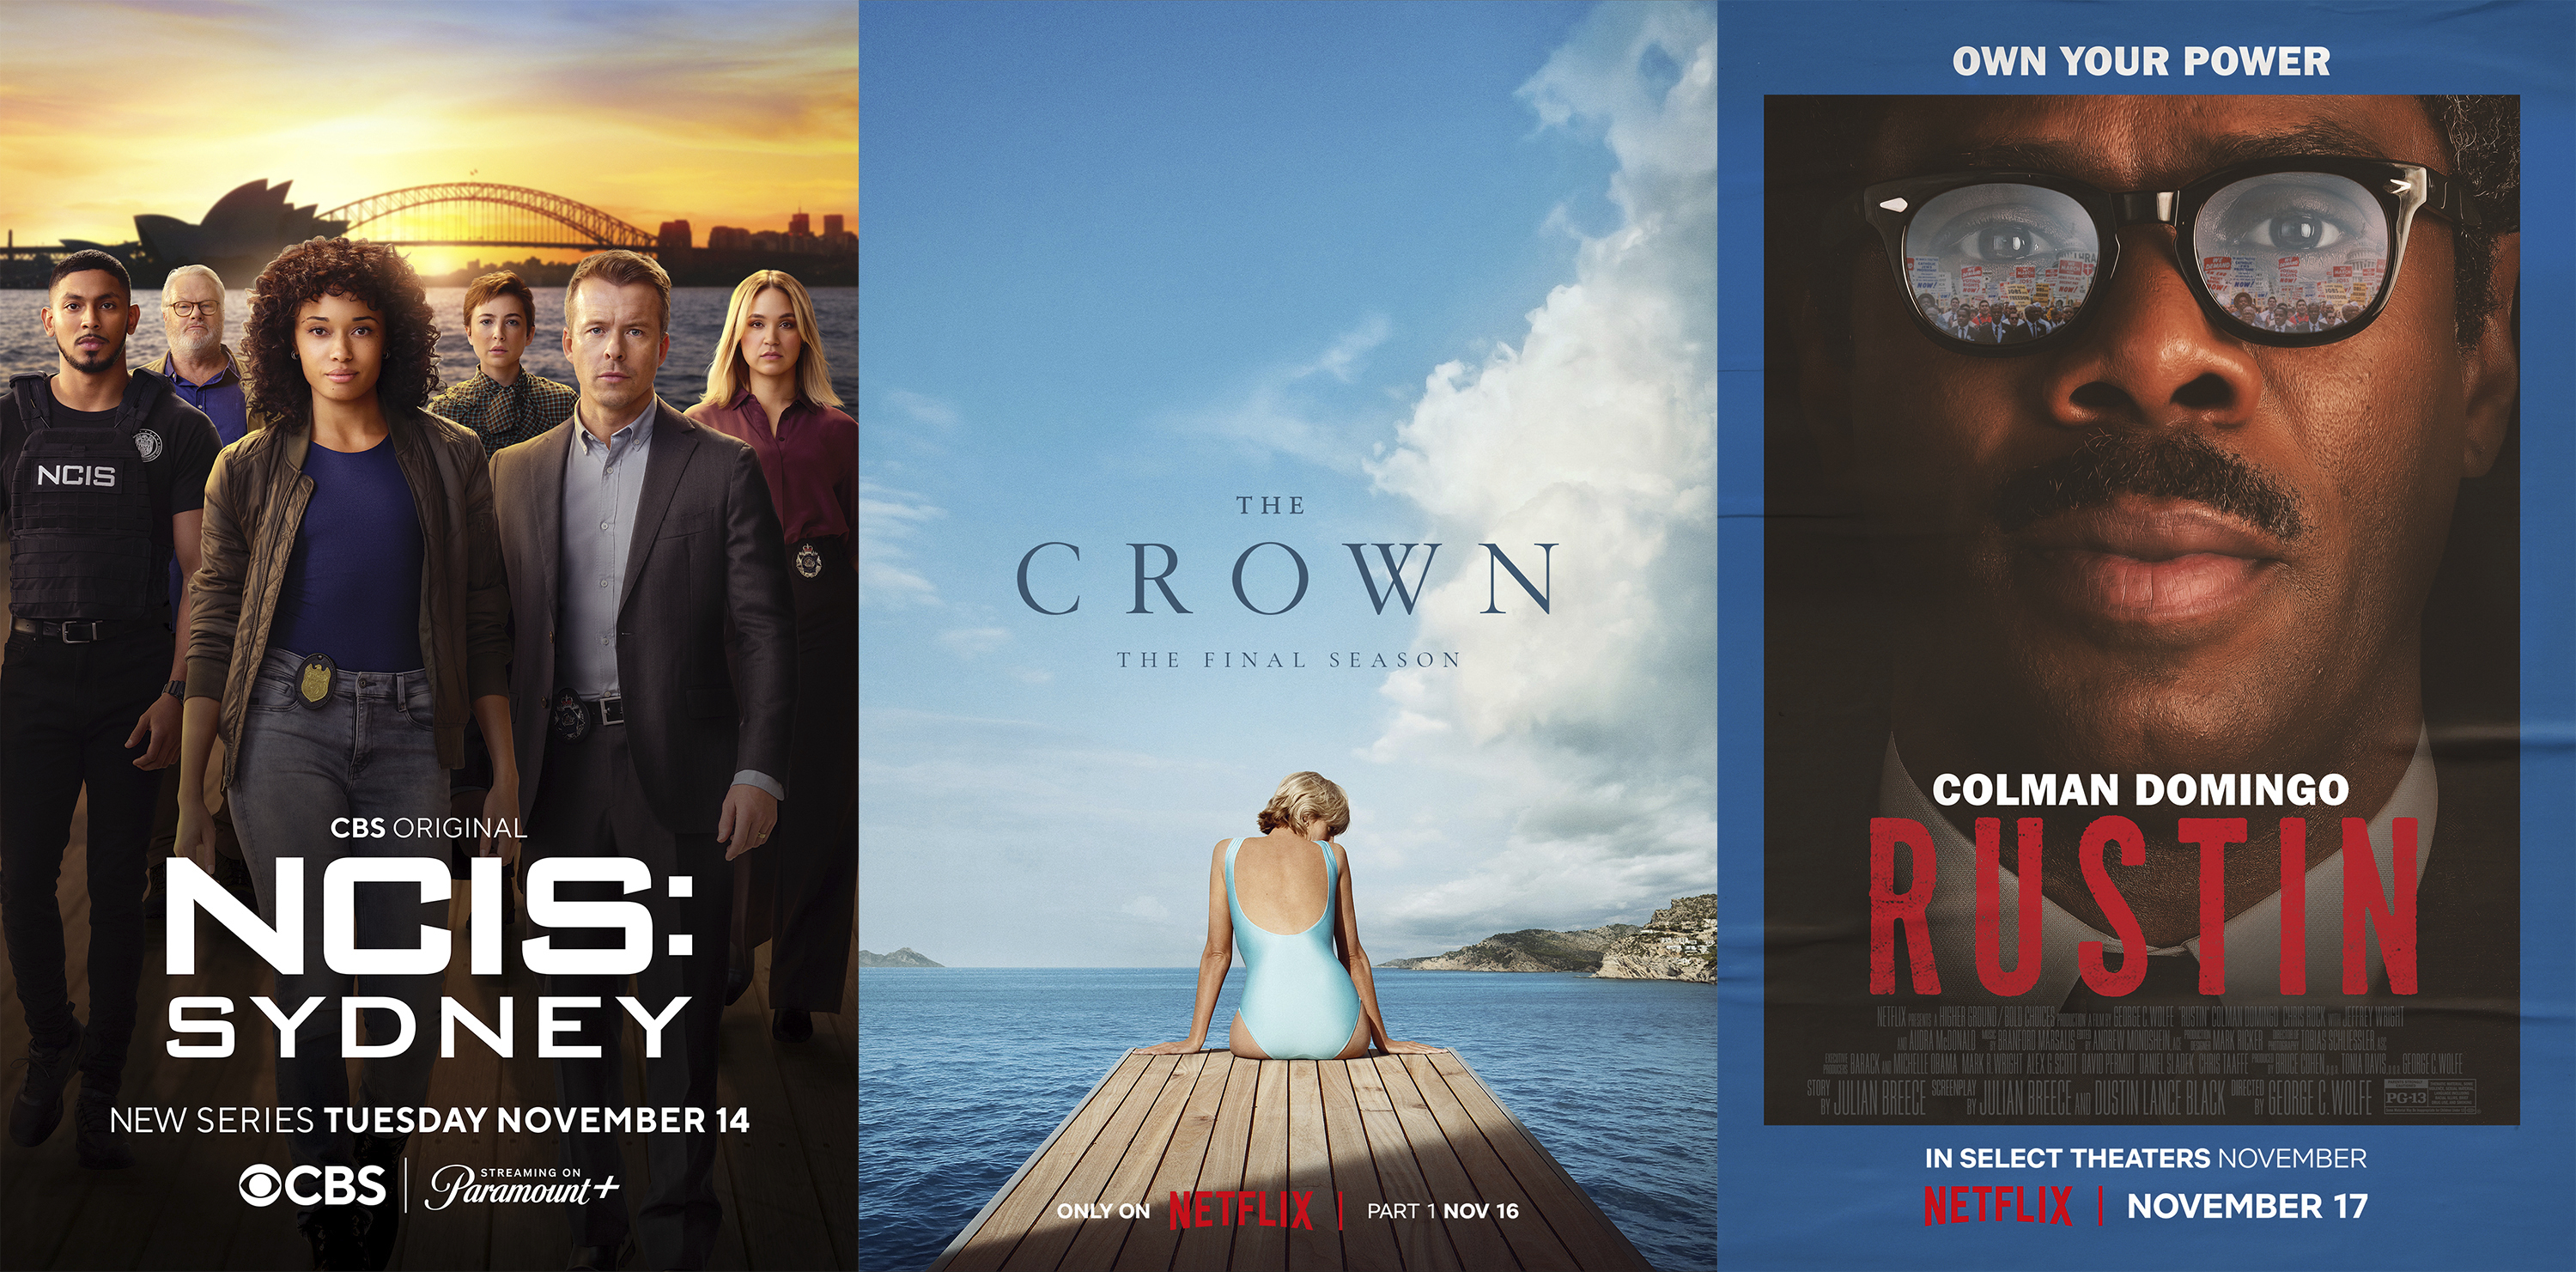 Netflix - Netflix updated their cover photo.